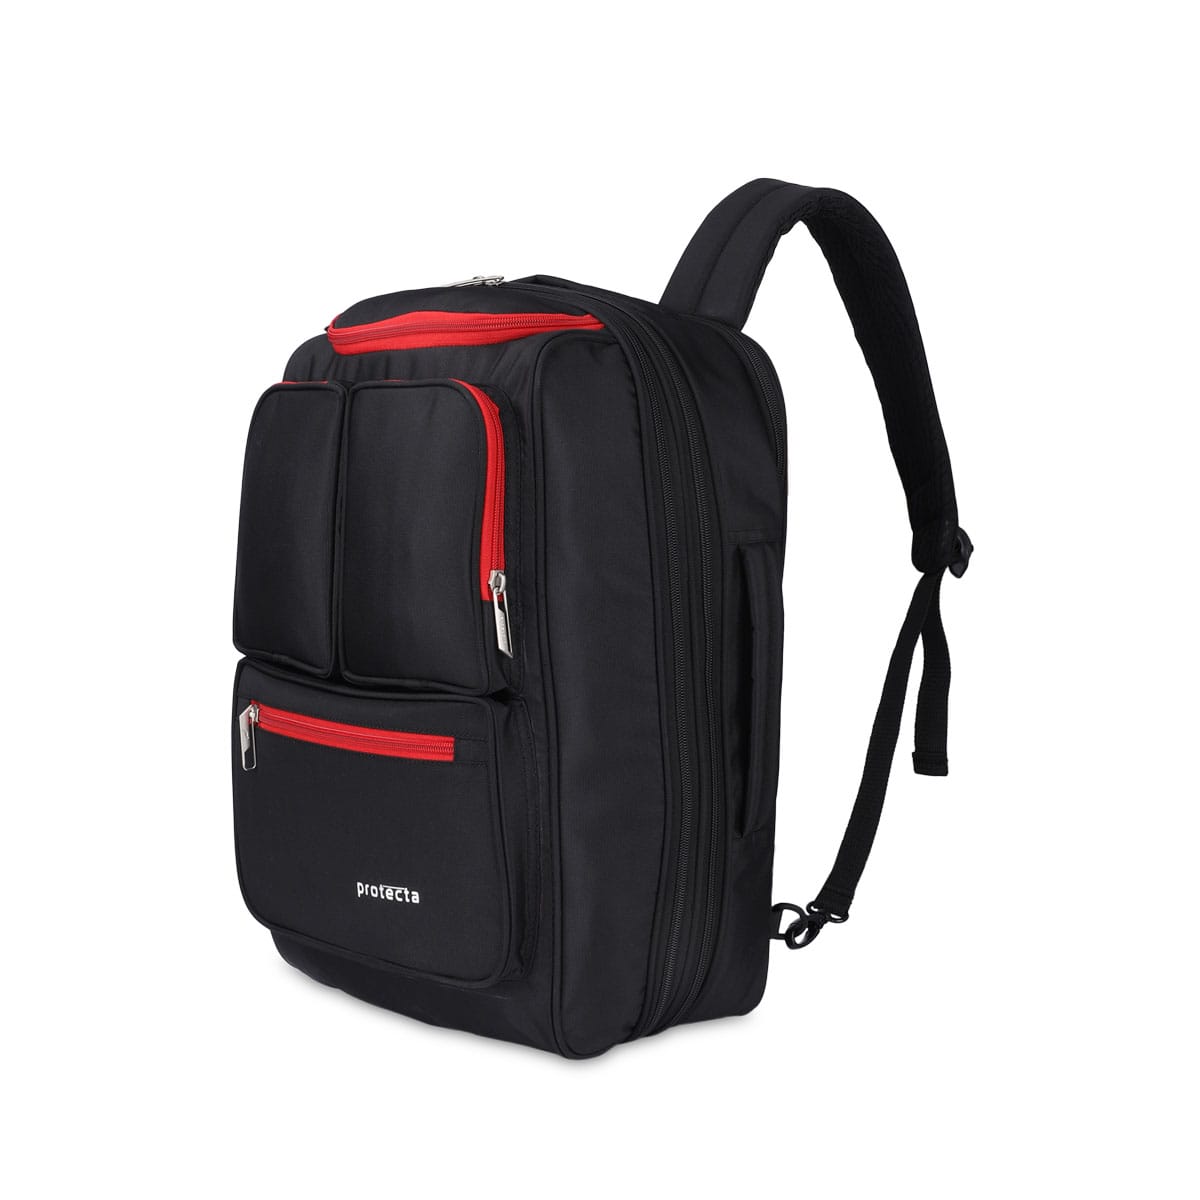 Black-Red | Protecta Organised Chaos XL Travel Convertible Laptop Backapck-Main